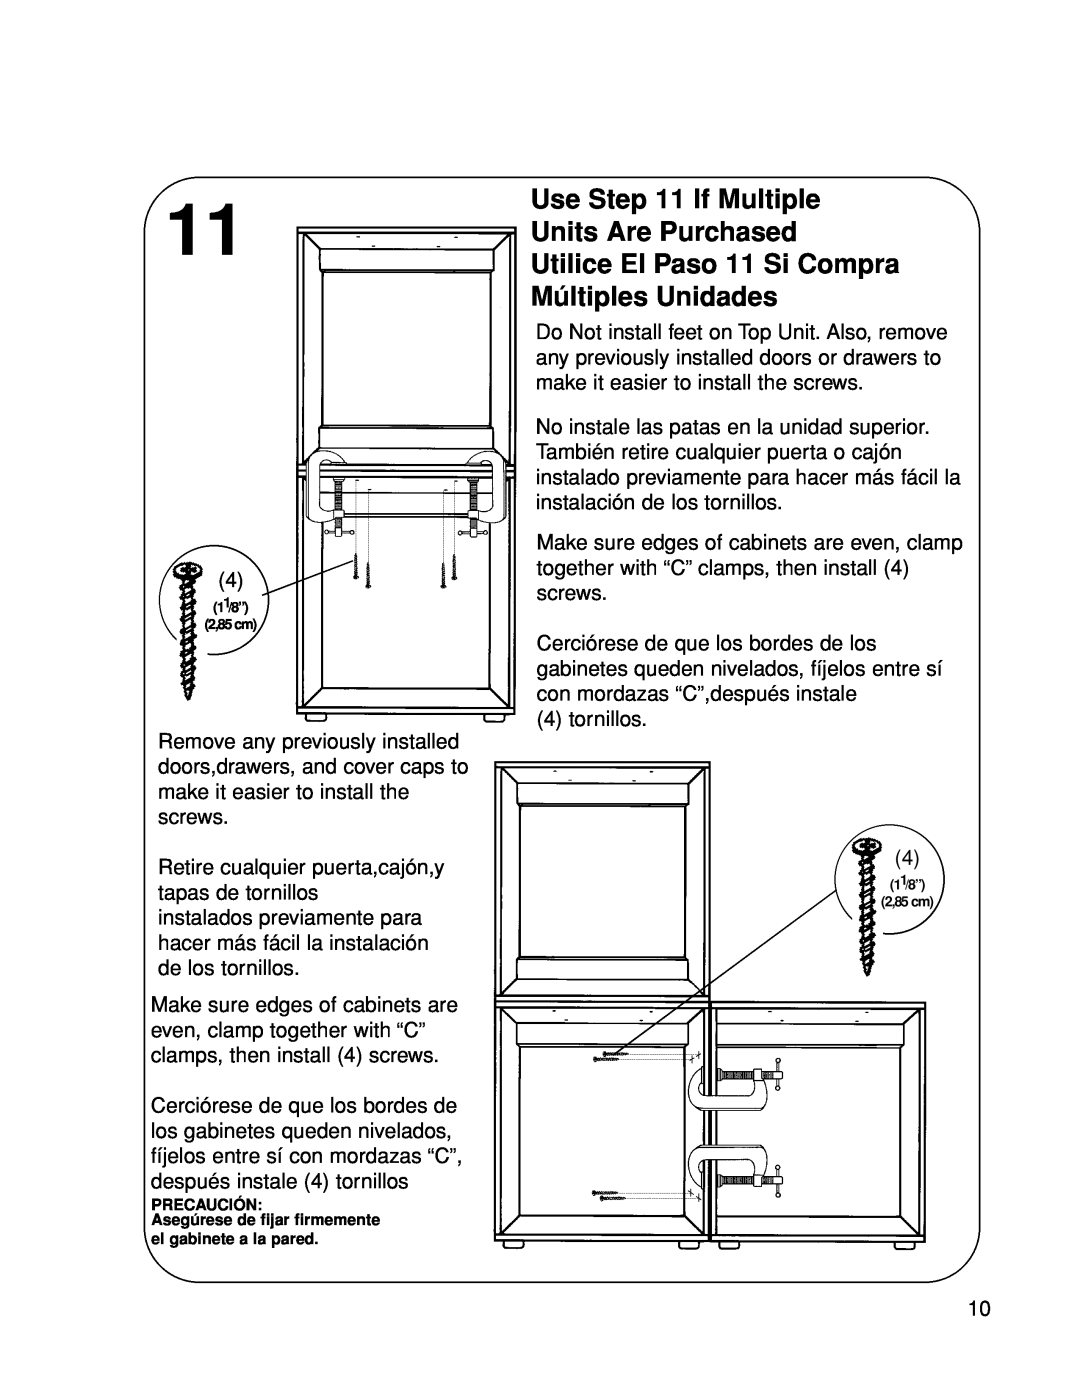 Closet Maid 12322 manual Use If Multiple Units Are Purchased, Utilice El Paso 11 Si Compra Múltiples Unidades 